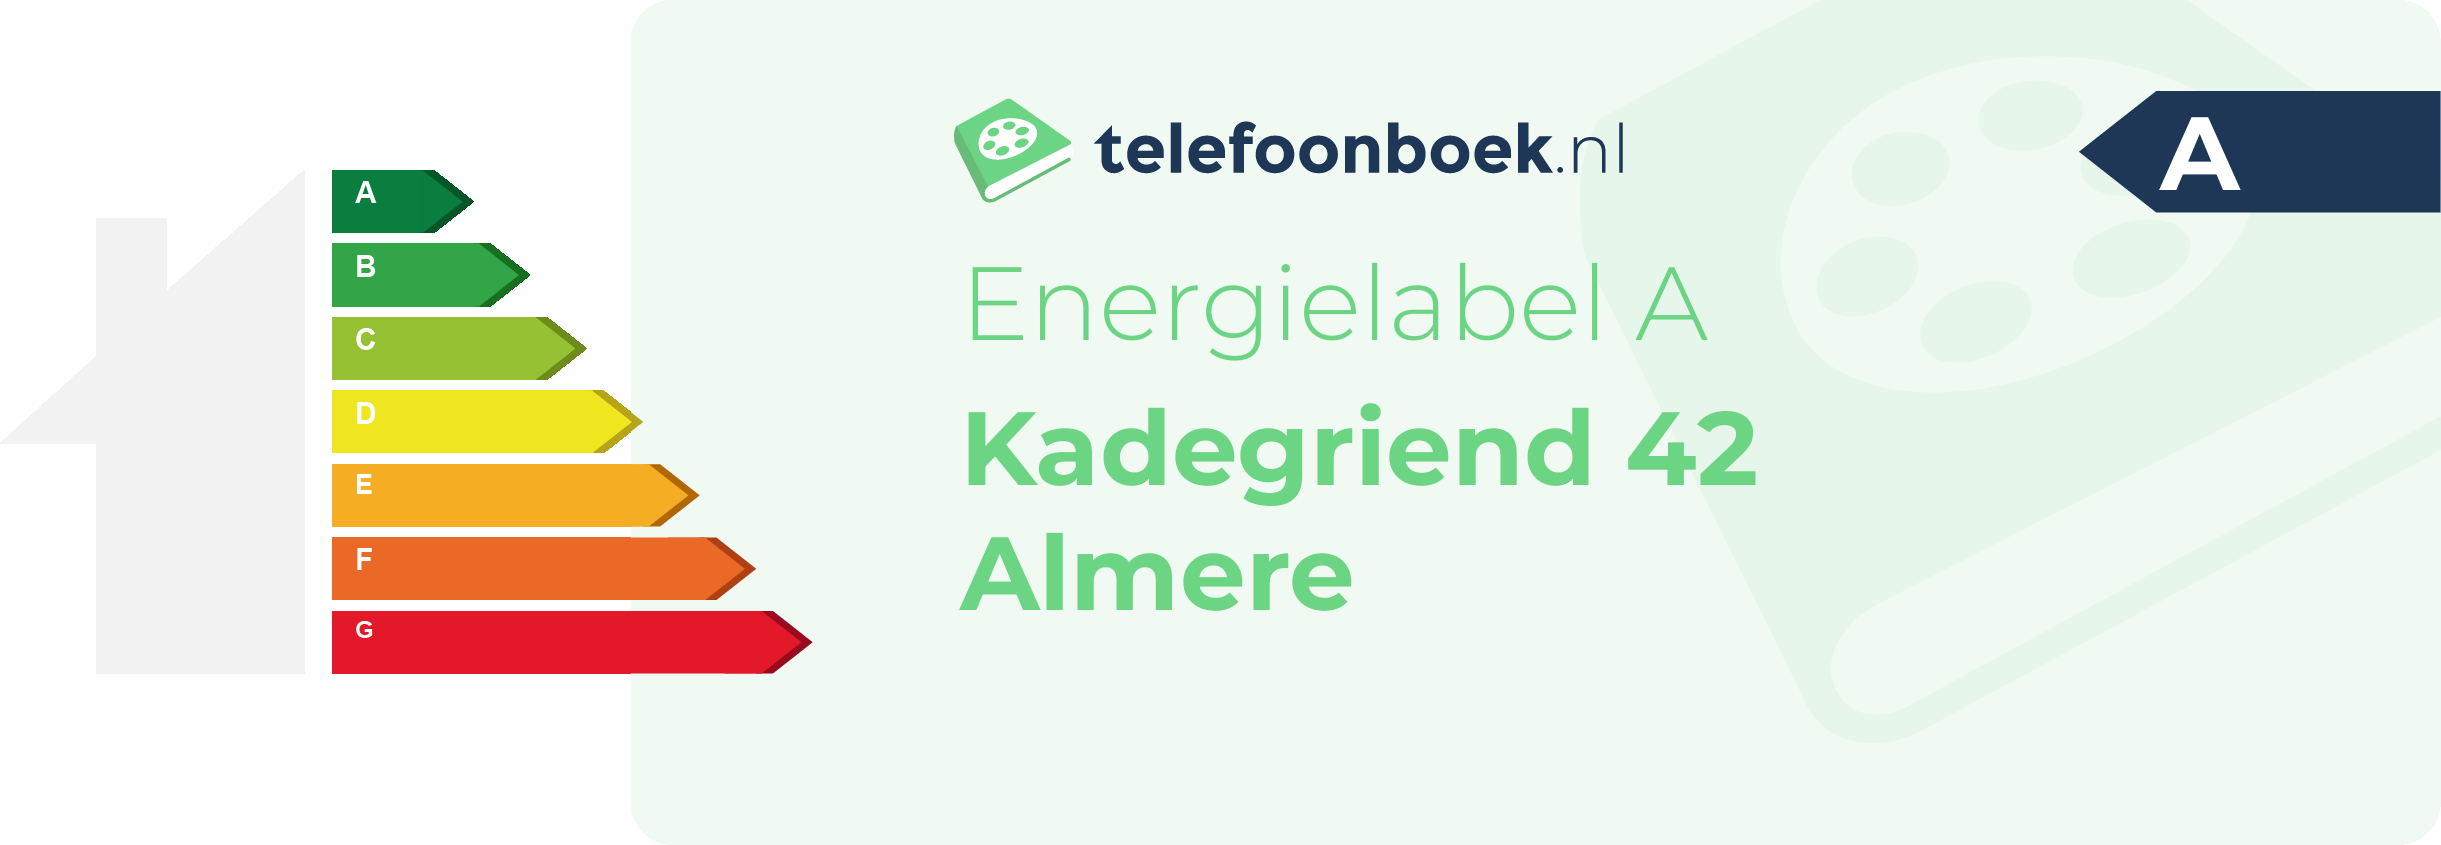 Energielabel Kadegriend 42 Almere